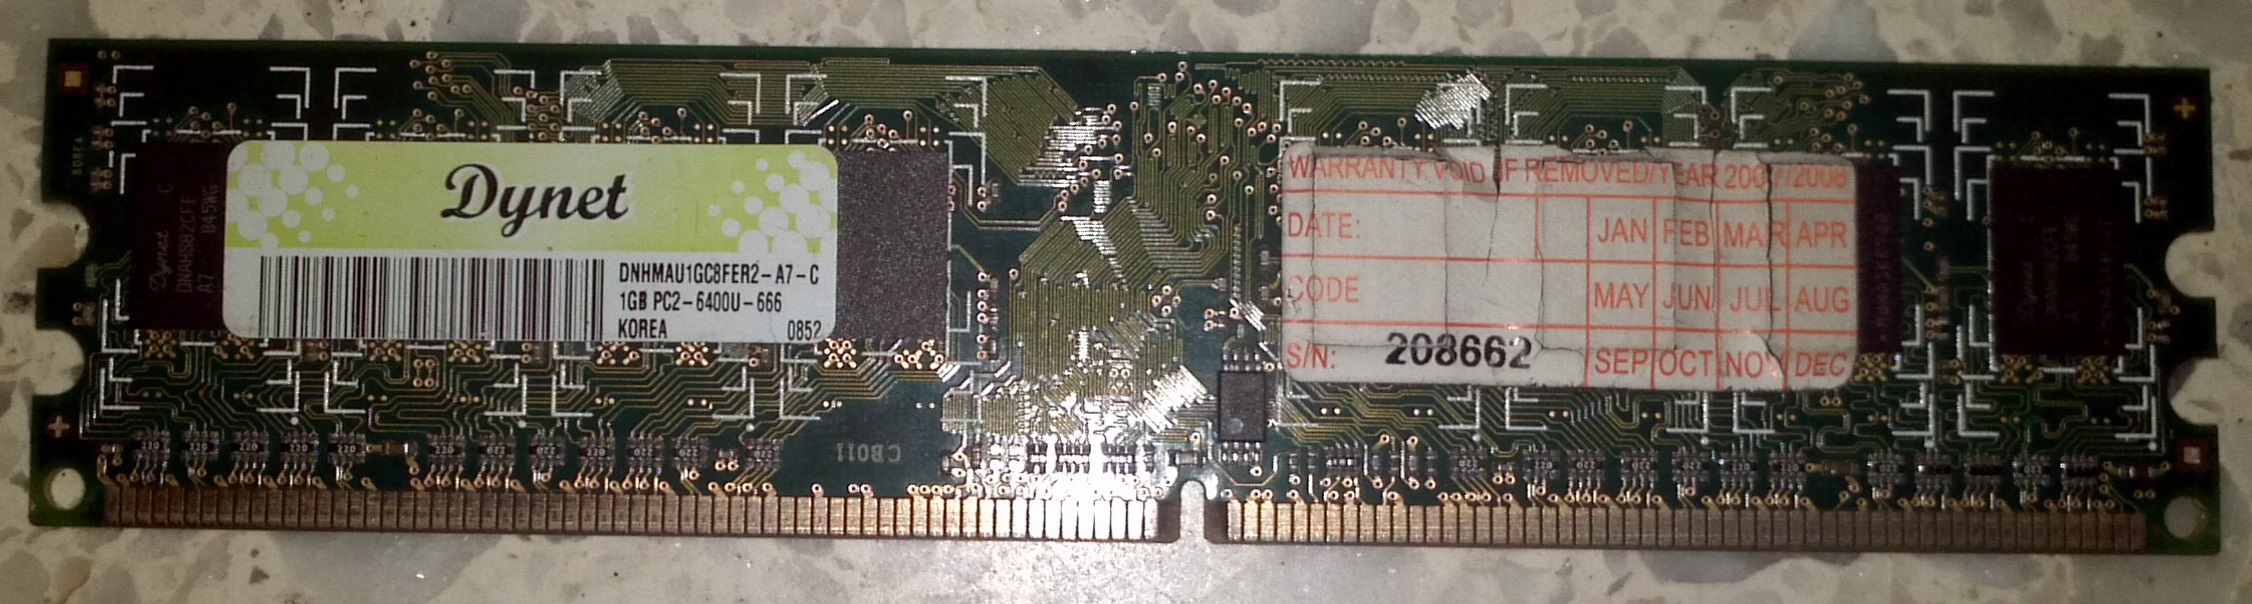 DDR2 1GB RAM - 800MHz - Dynet large image 0